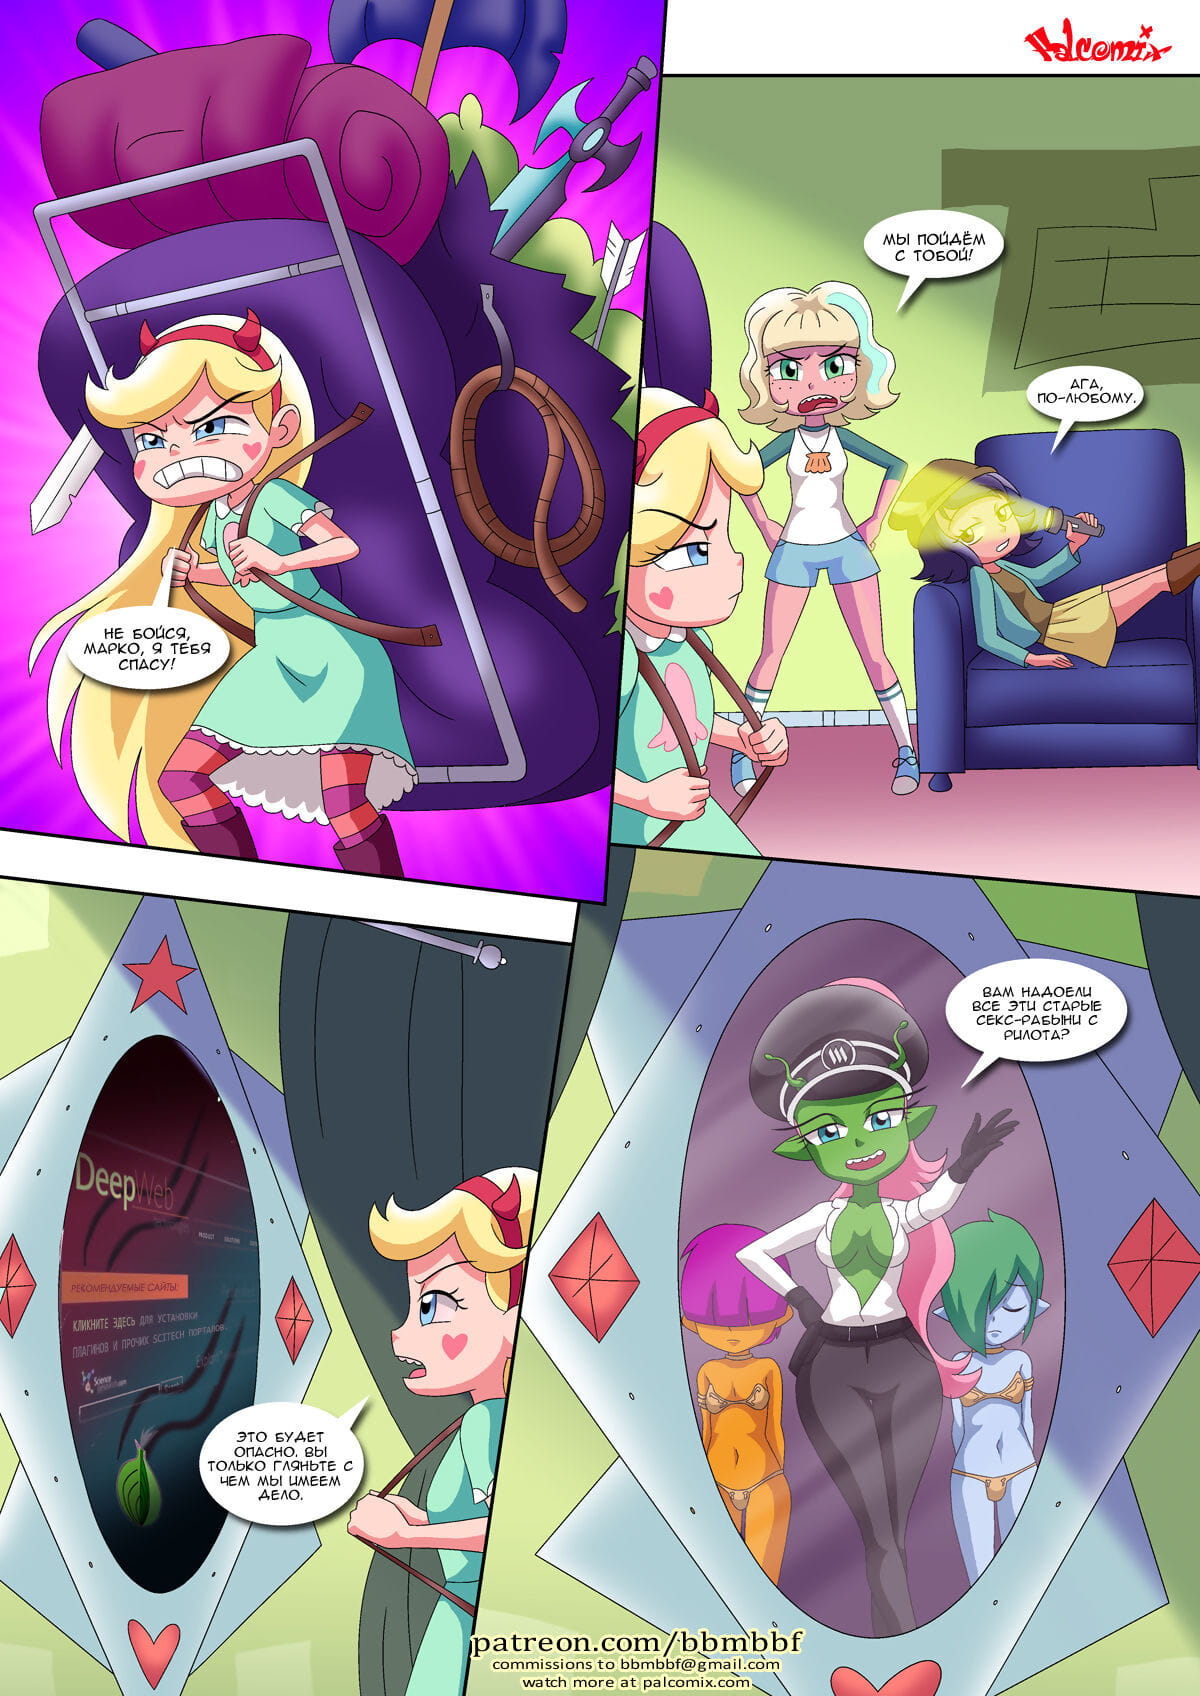 Saving Princess Marco - Спасение принцессы Марко - part 2 page 1